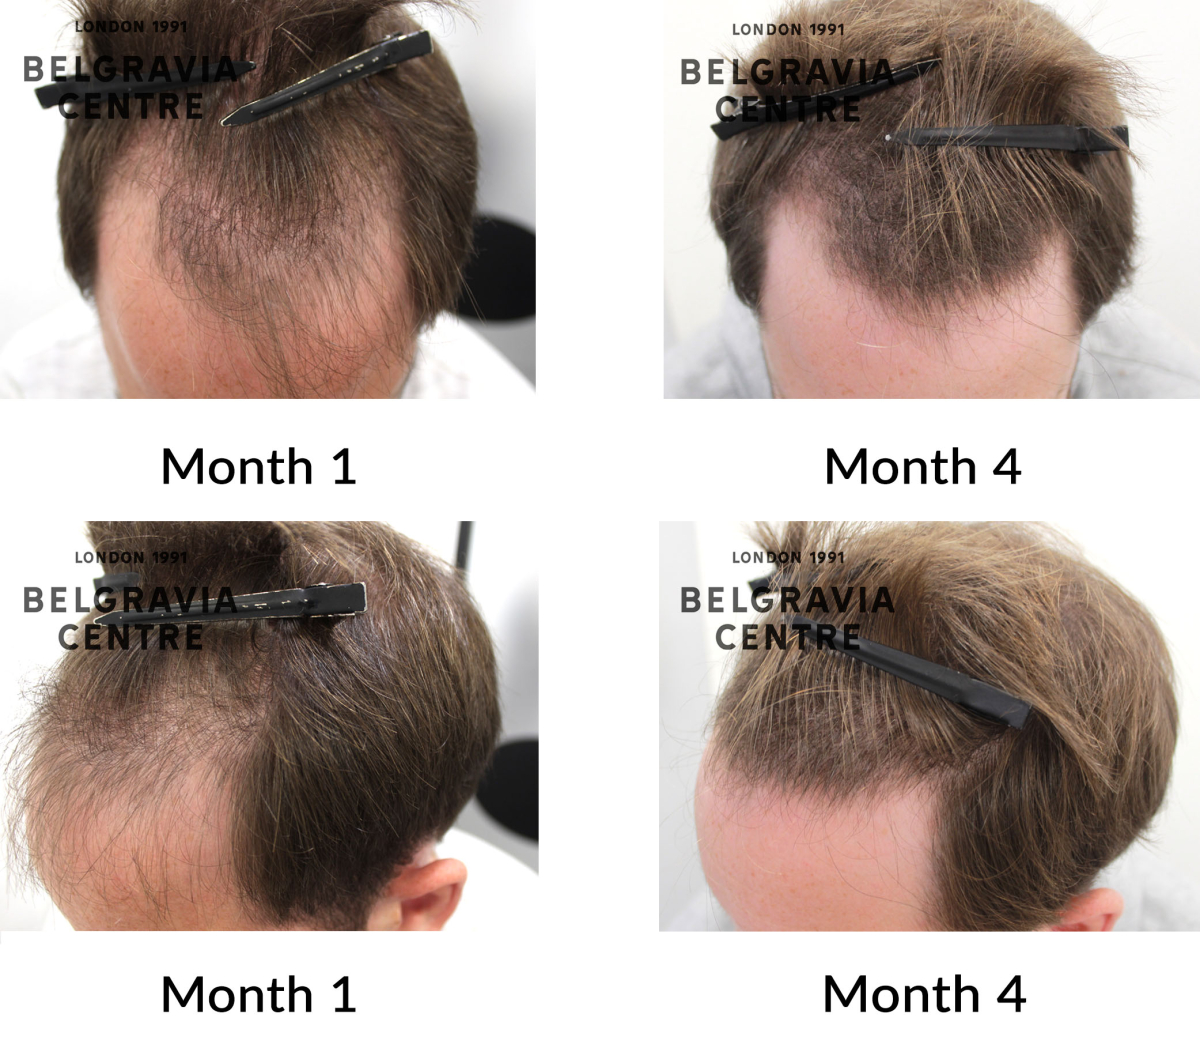 male pattern hair loss the belgravia centre 457021